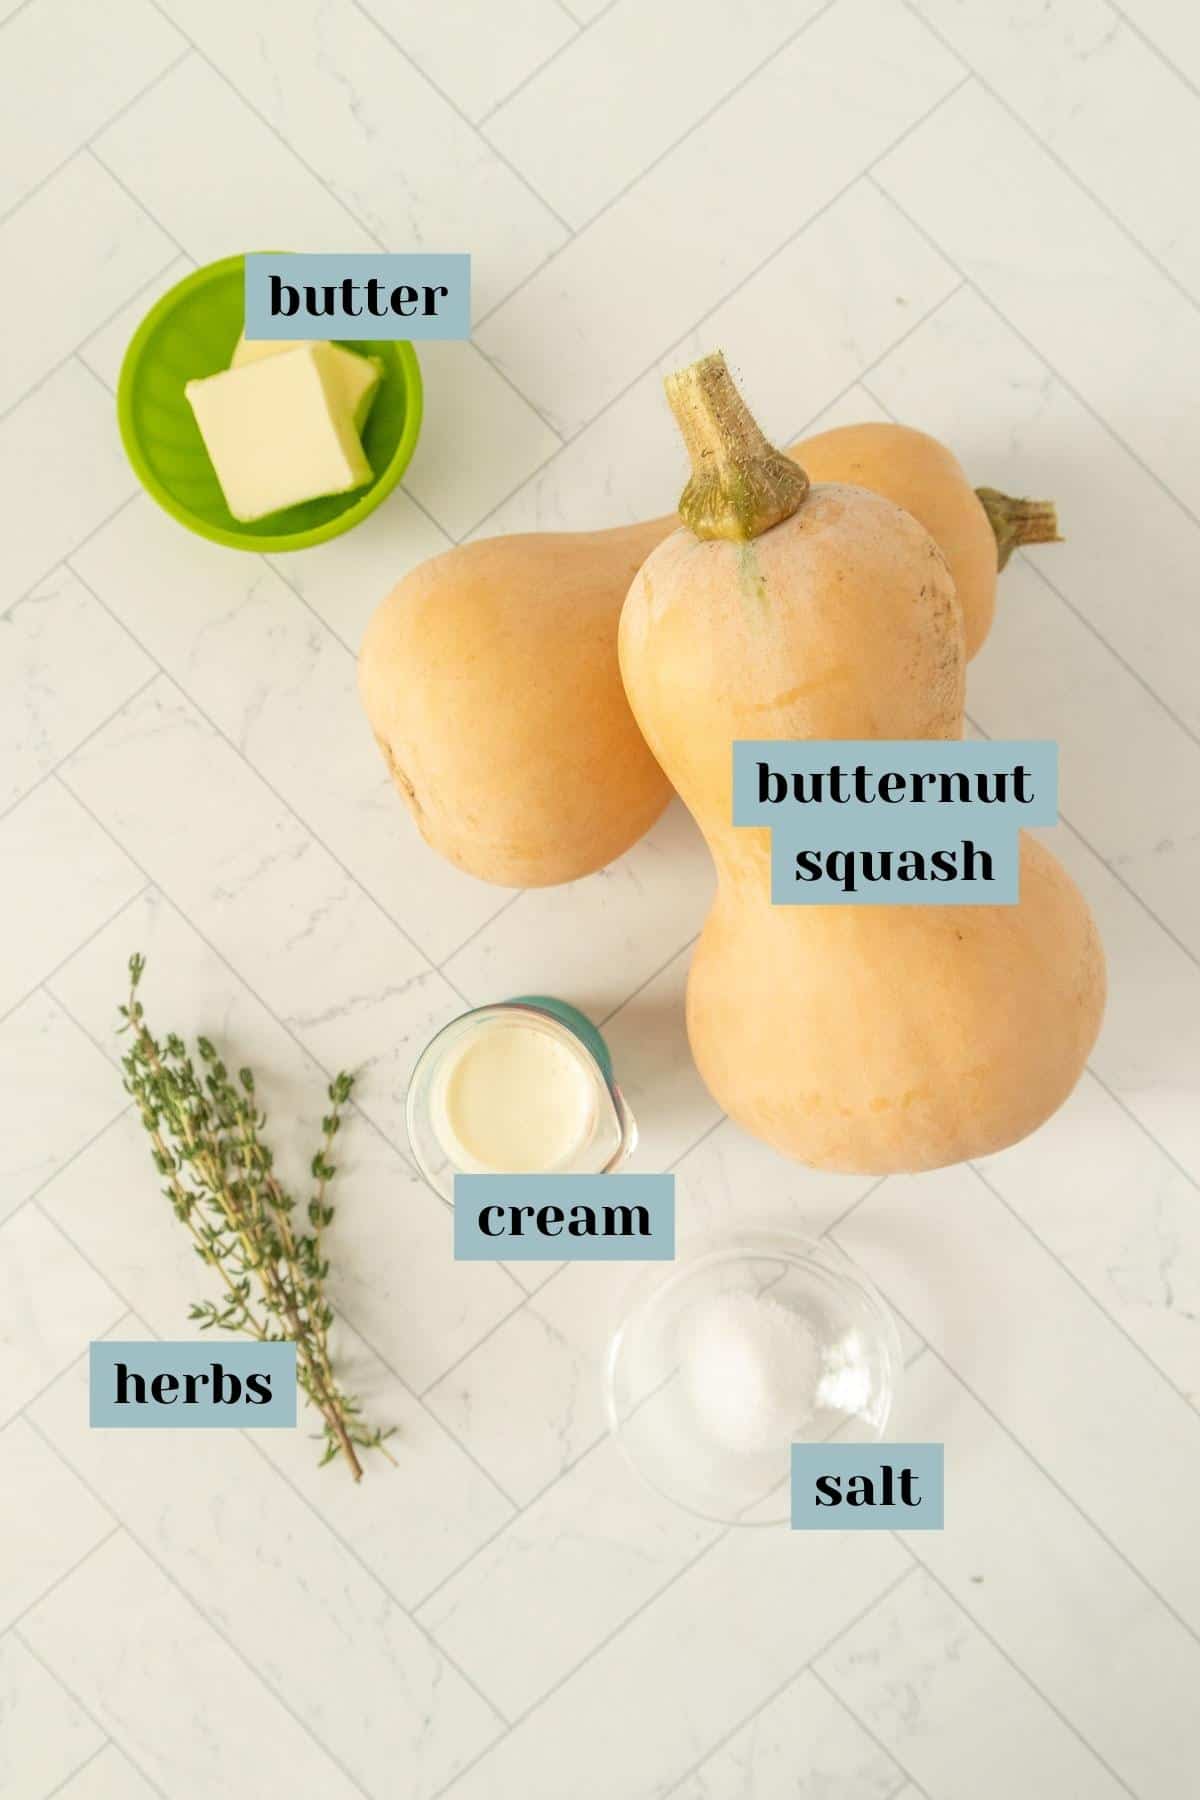 Ingredients for butternut squash mash.